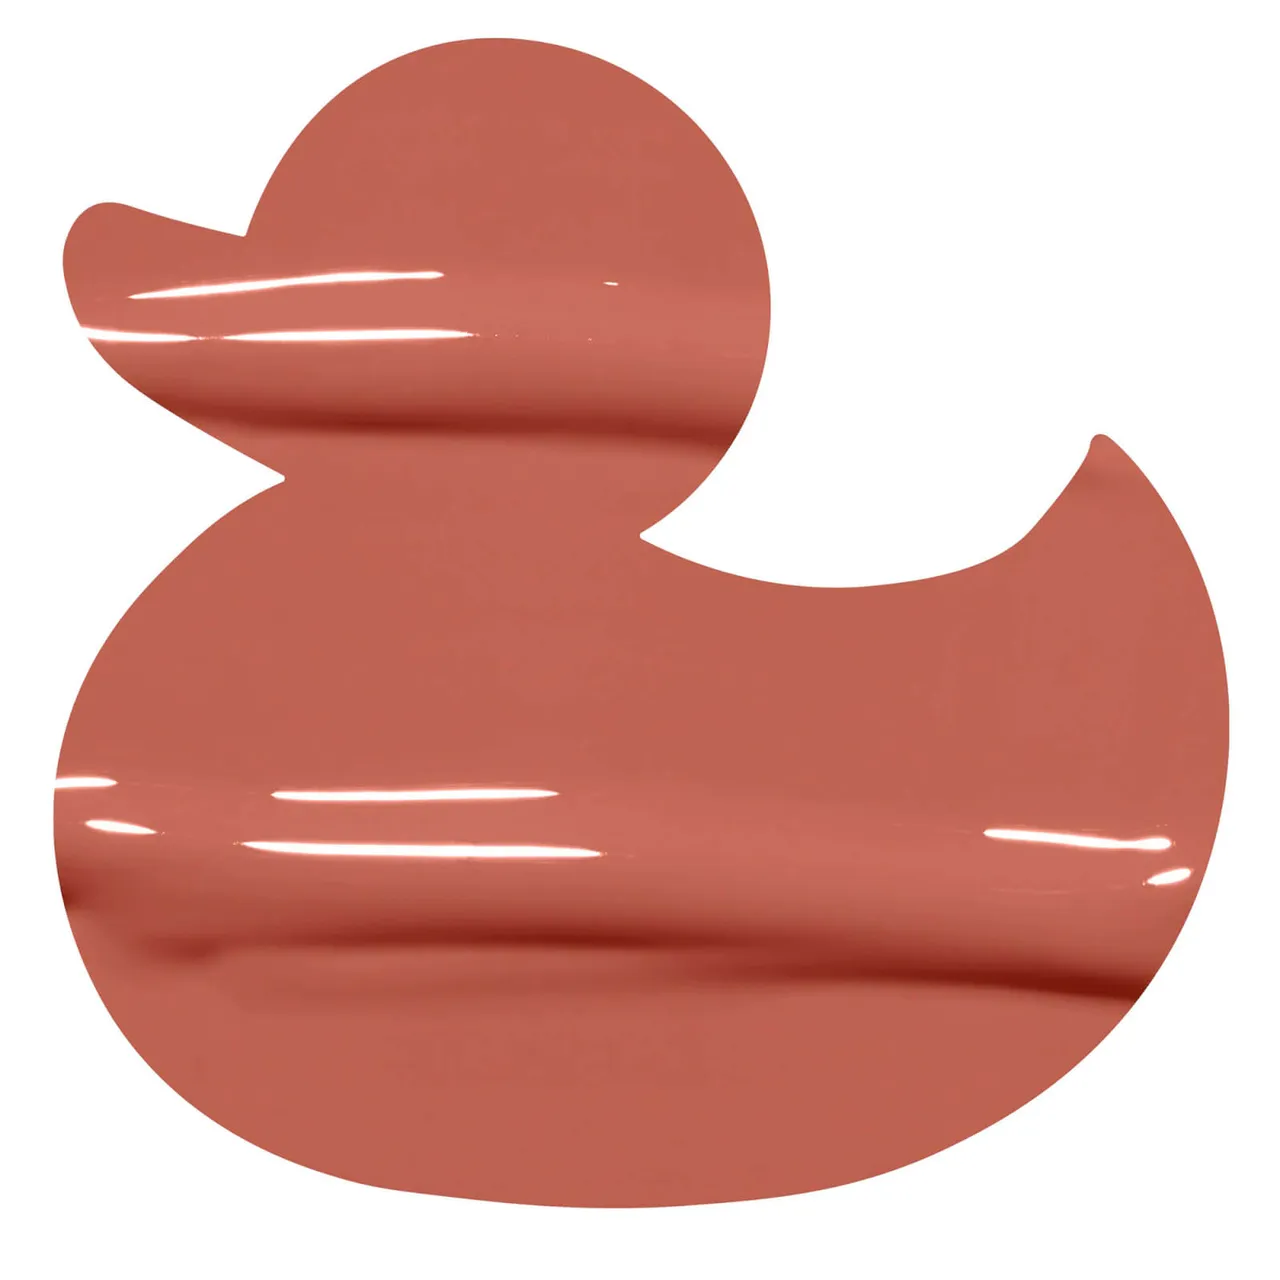 NYX Professional Makeup Duck Plump Lip Plumping Gloss (Various Shades) - Apri-caught